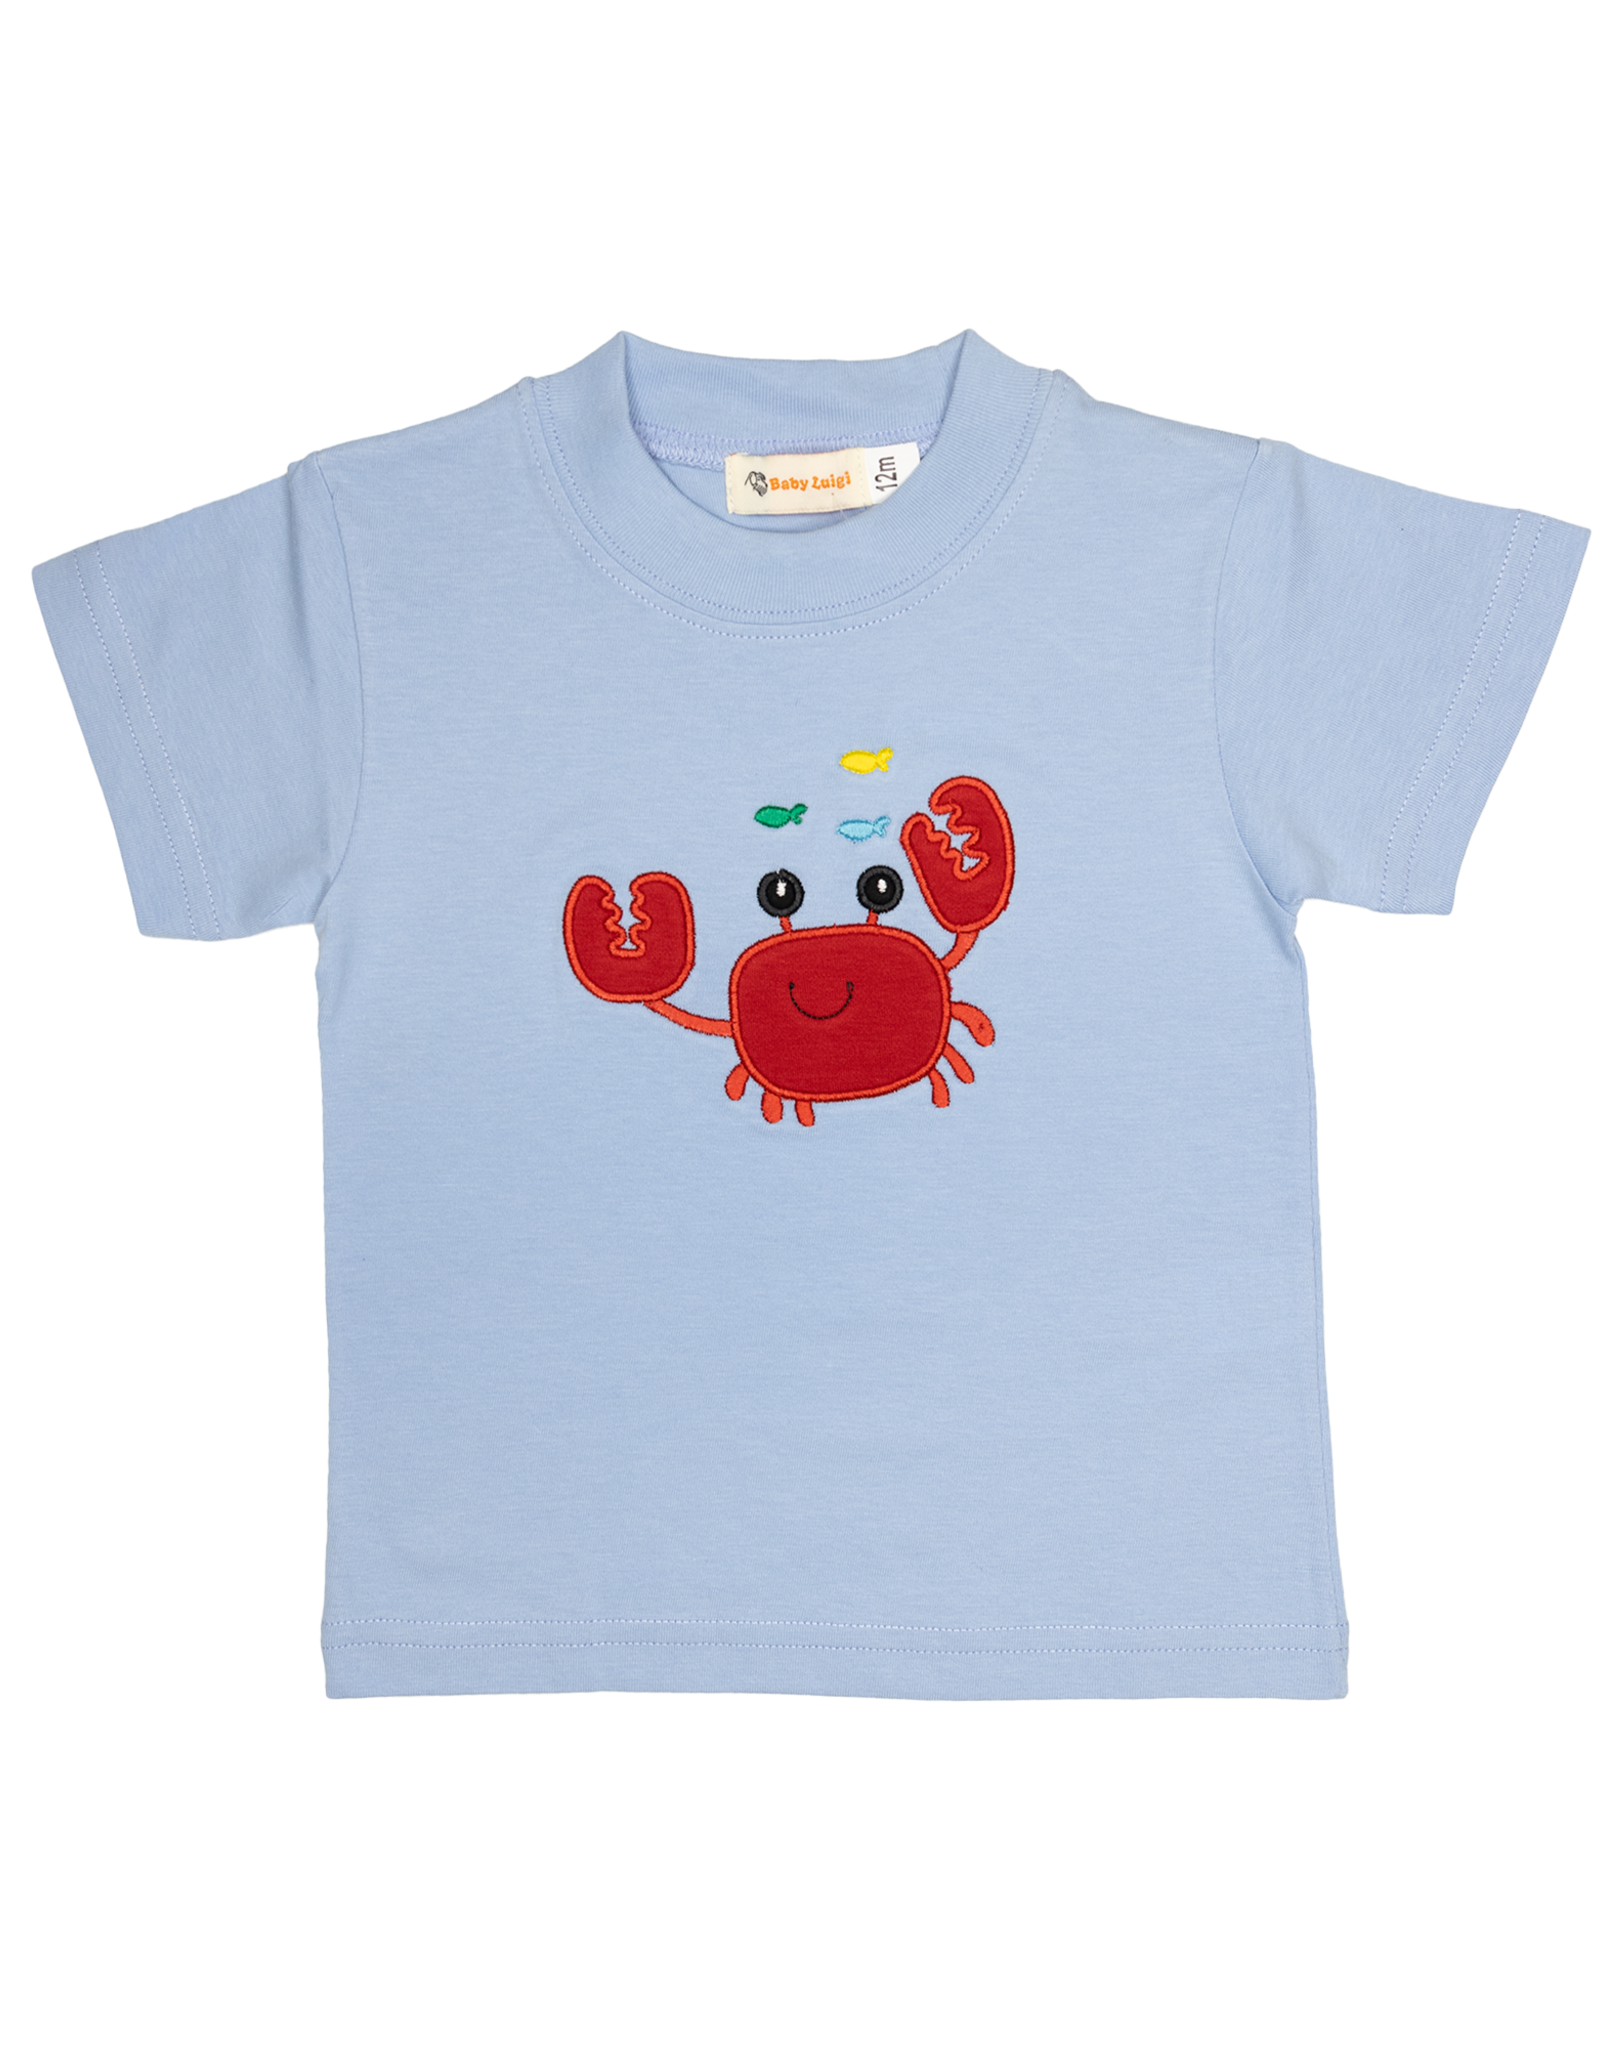 Luigi S24 Sky Blue Crab Fish Shirt